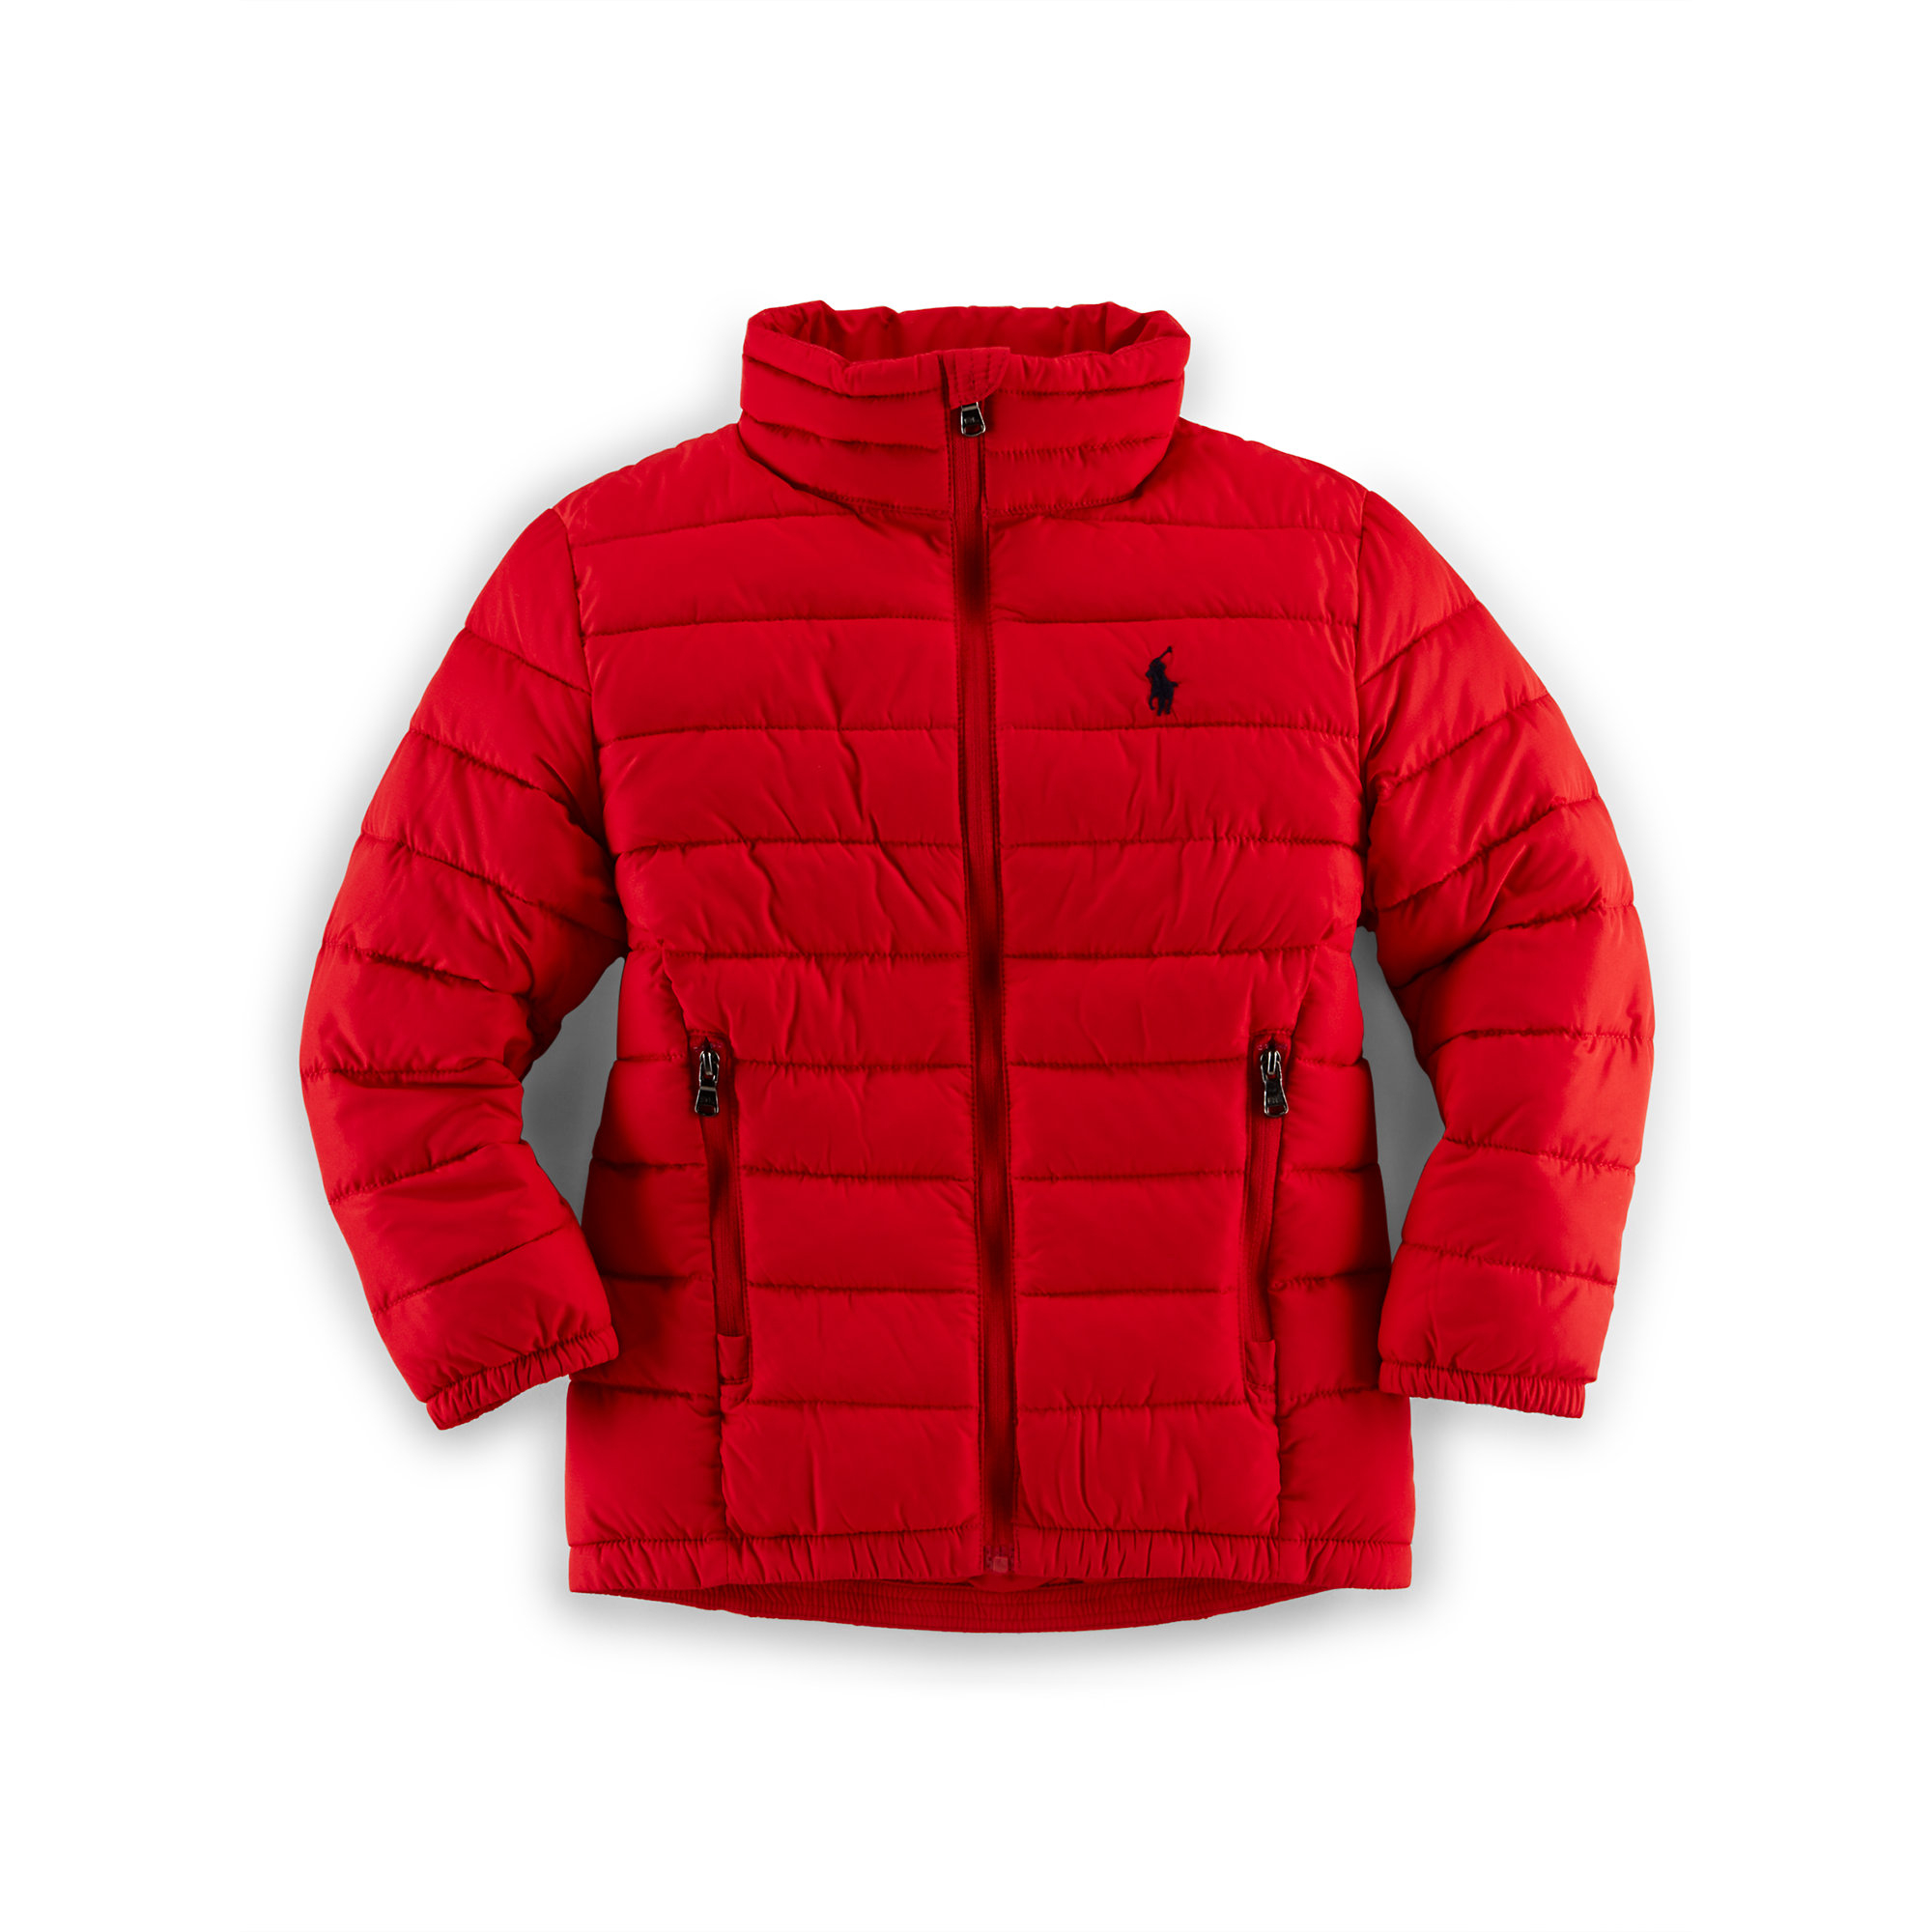 Red Puffer Jacket Ralph Lauren Outlet, SAVE 34% - eagleflair.com